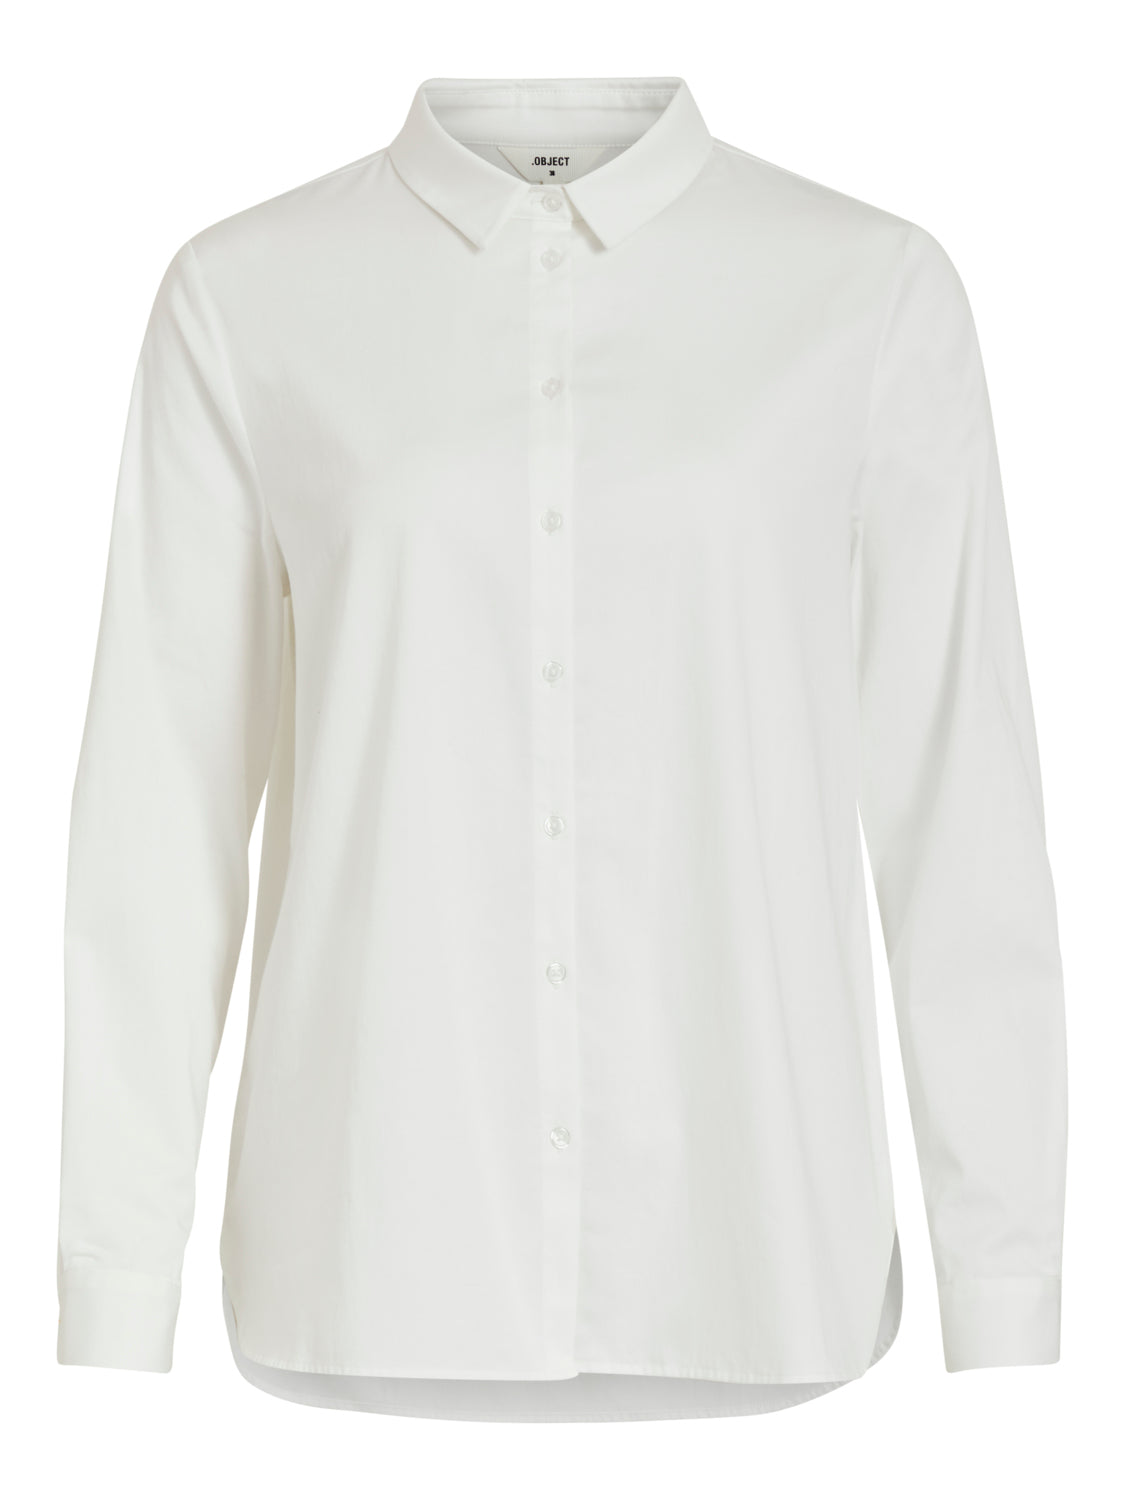 OBJROXA Shirts - white